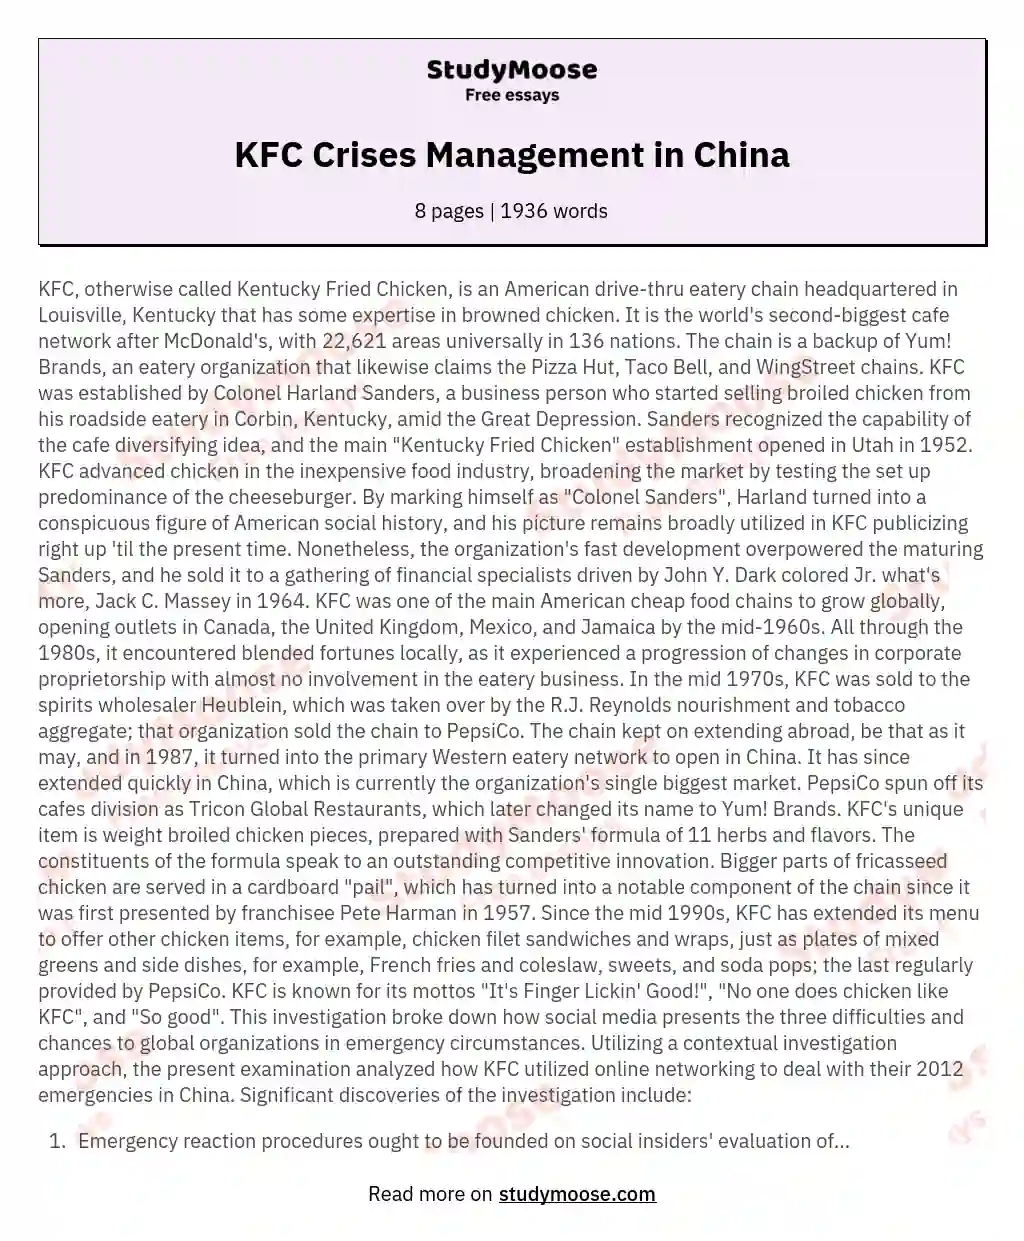 KFC Crises Management in China essay